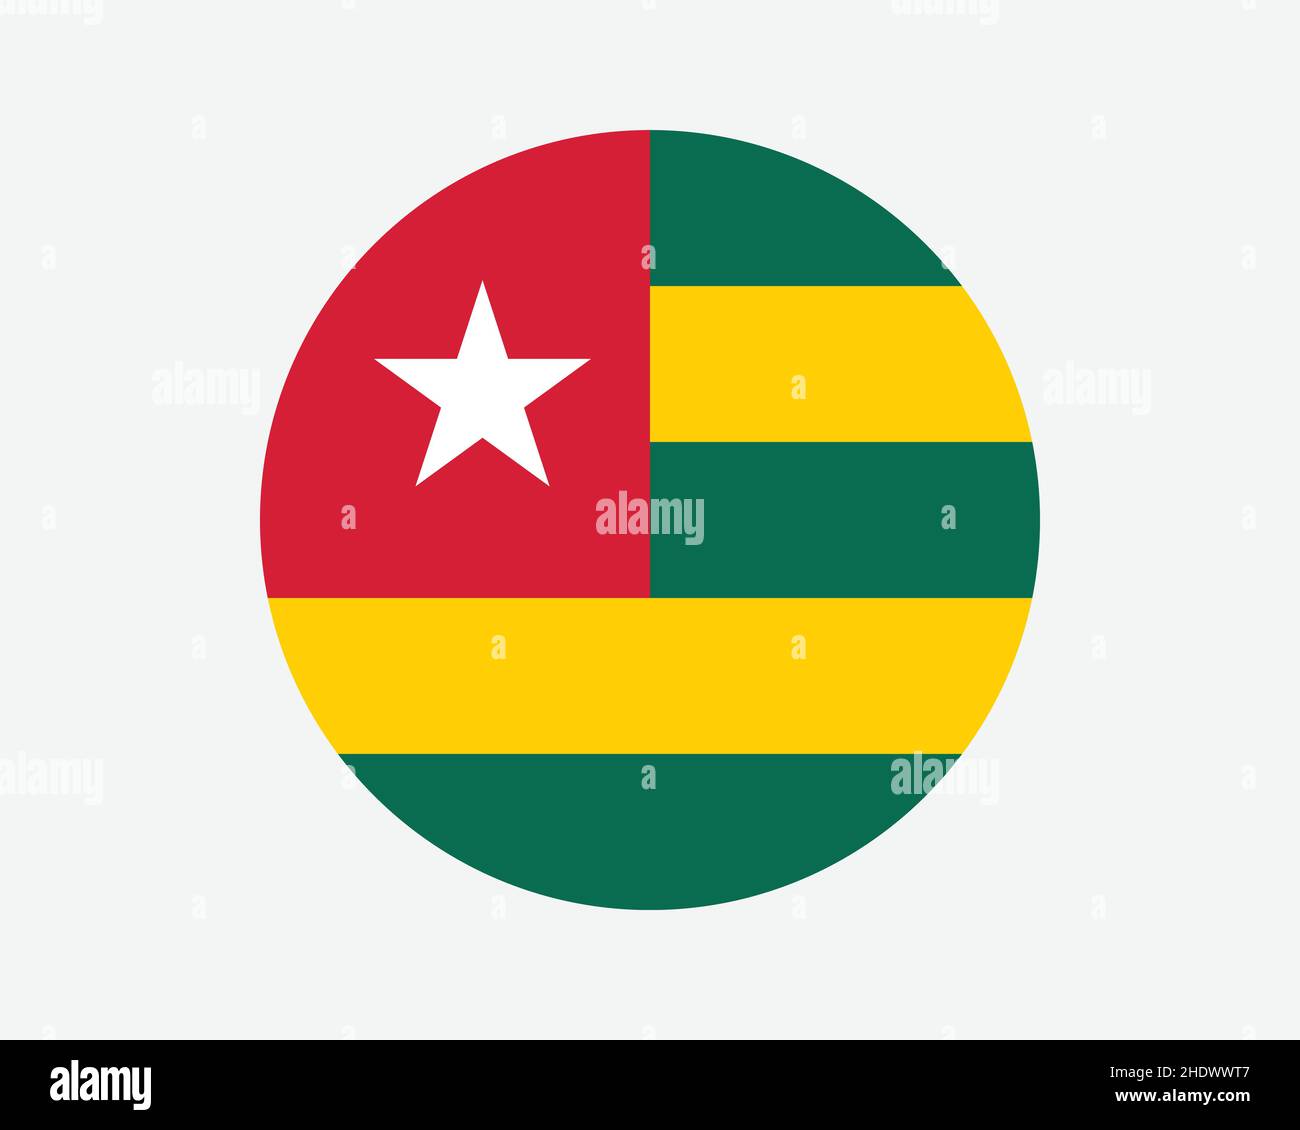 Togo Round Country Flagge. Togolese Circle National Flag. Togolesische Republic – Rundschreiben-Knopfbanner. EPS-Vektorgrafik. Stock Vektor